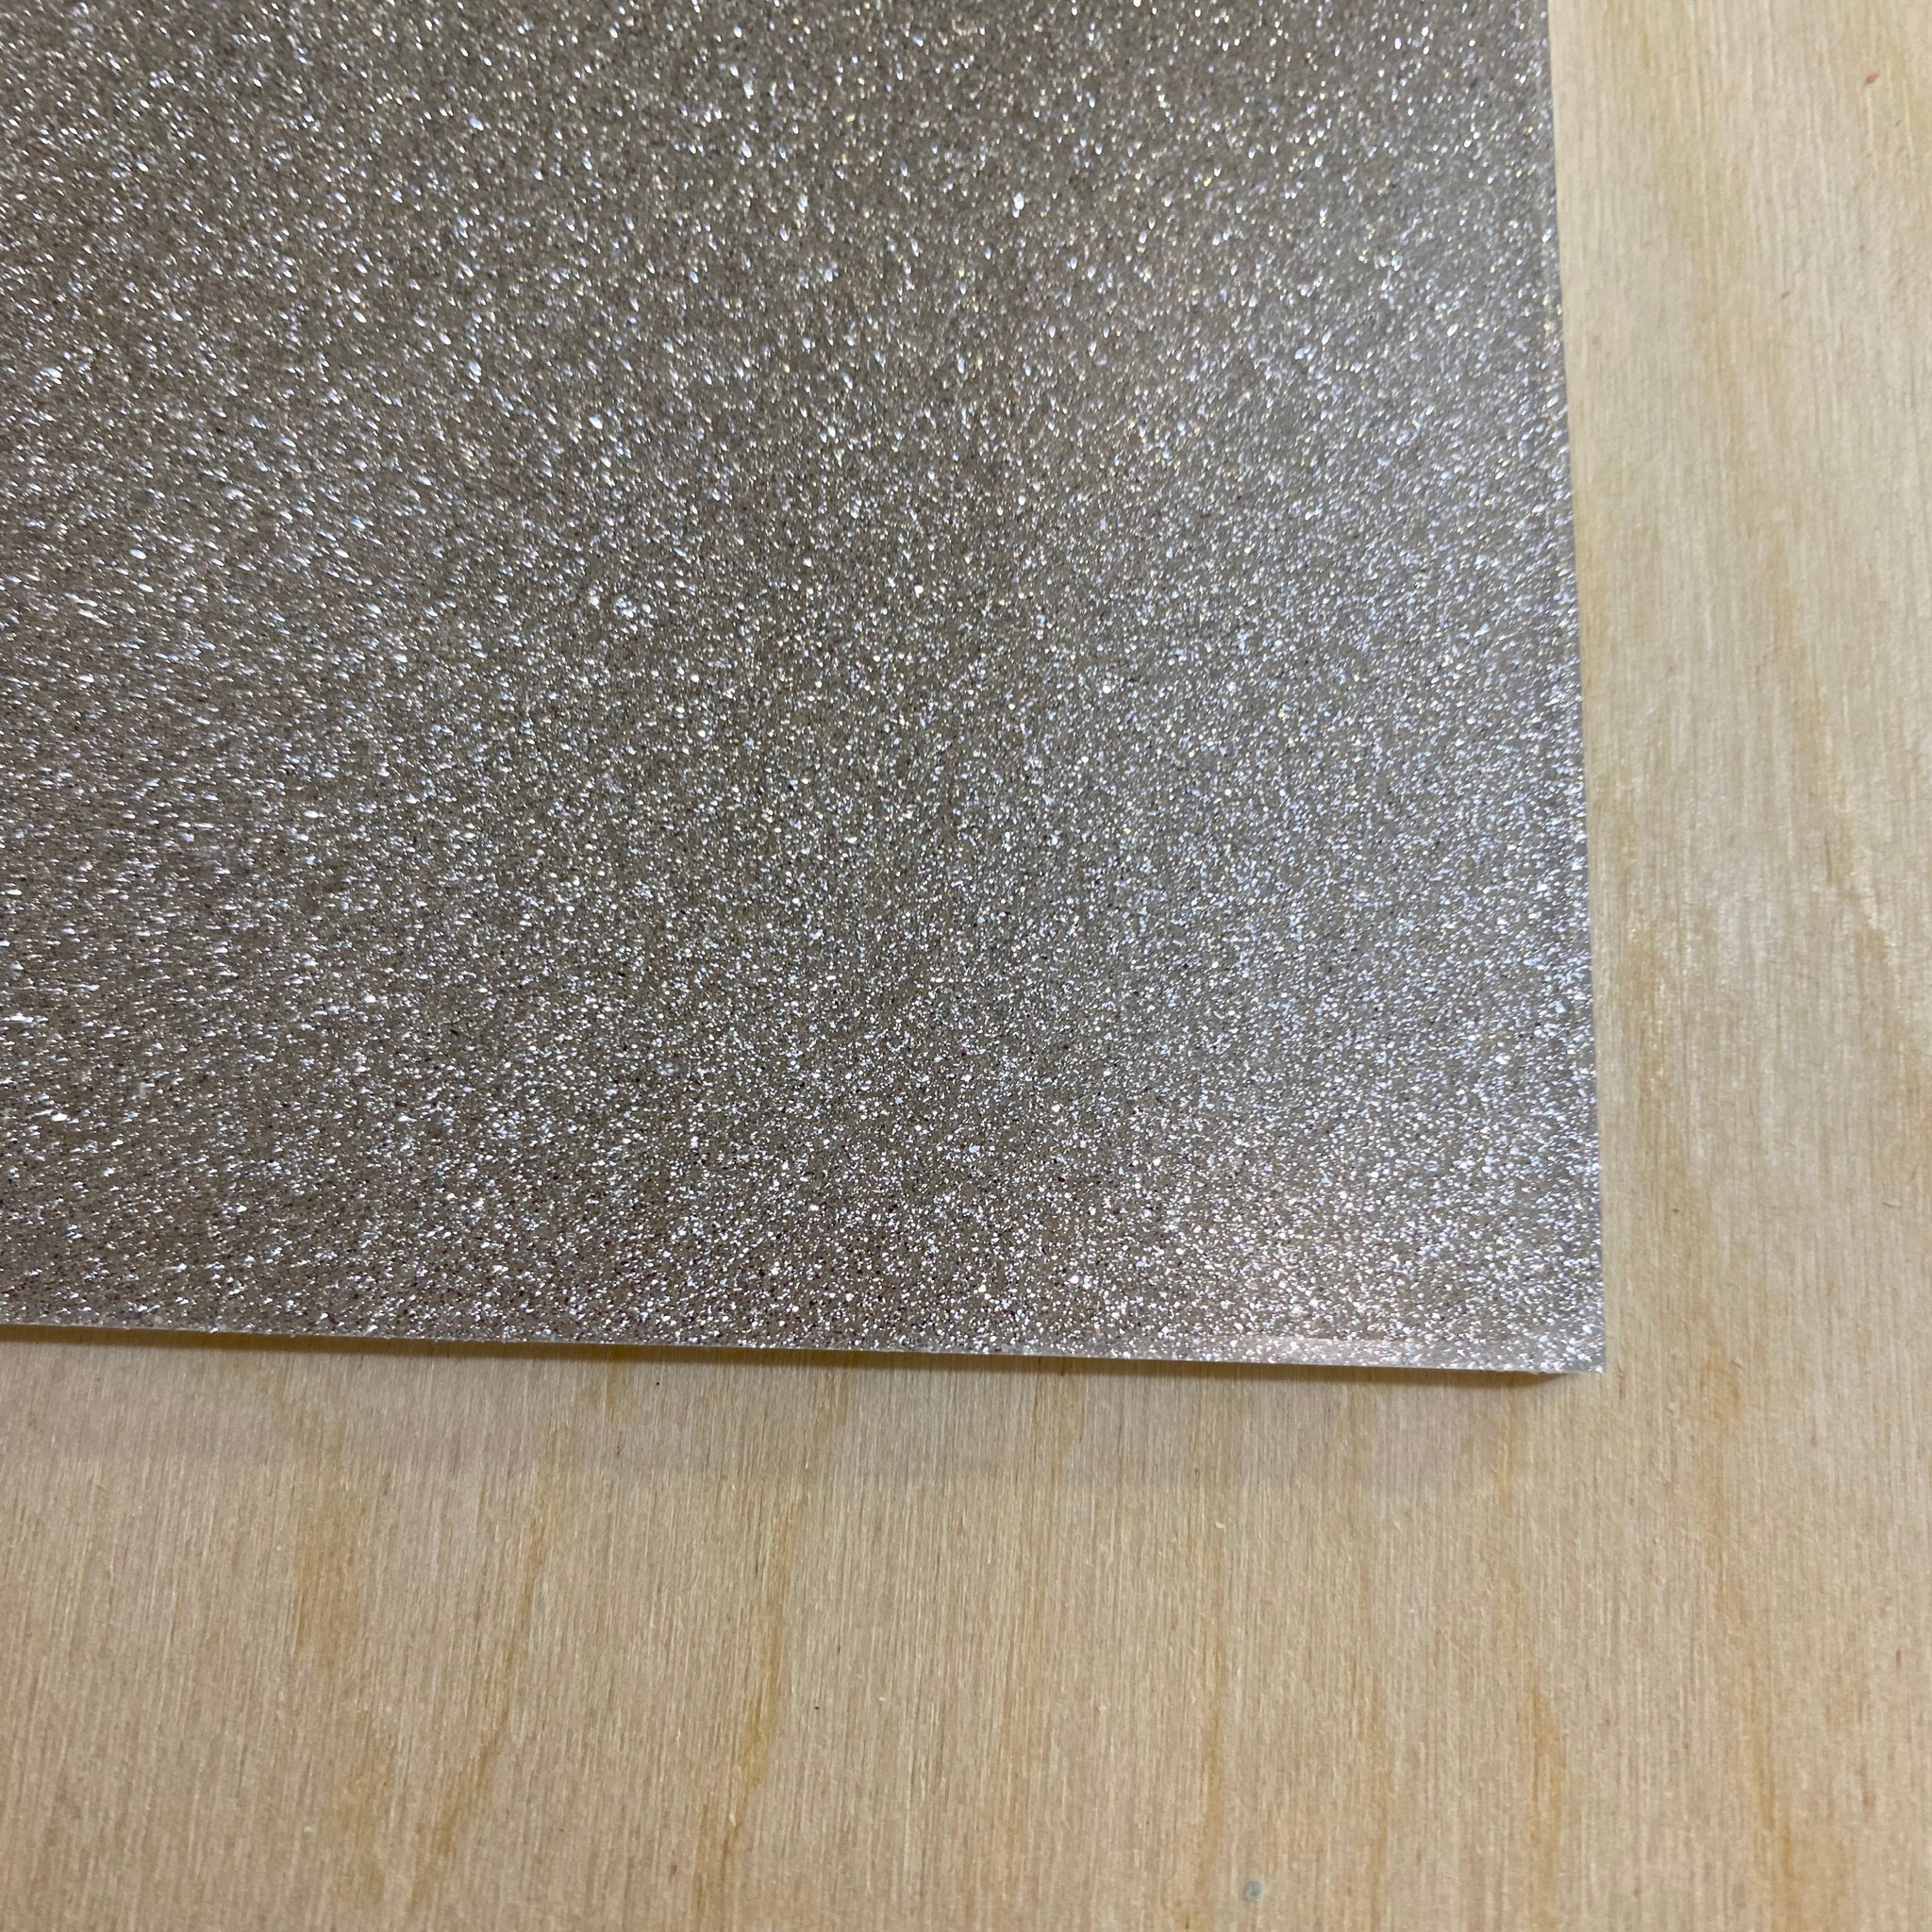 Opaque Gray Cast Acrylic Sheet – MakerStock